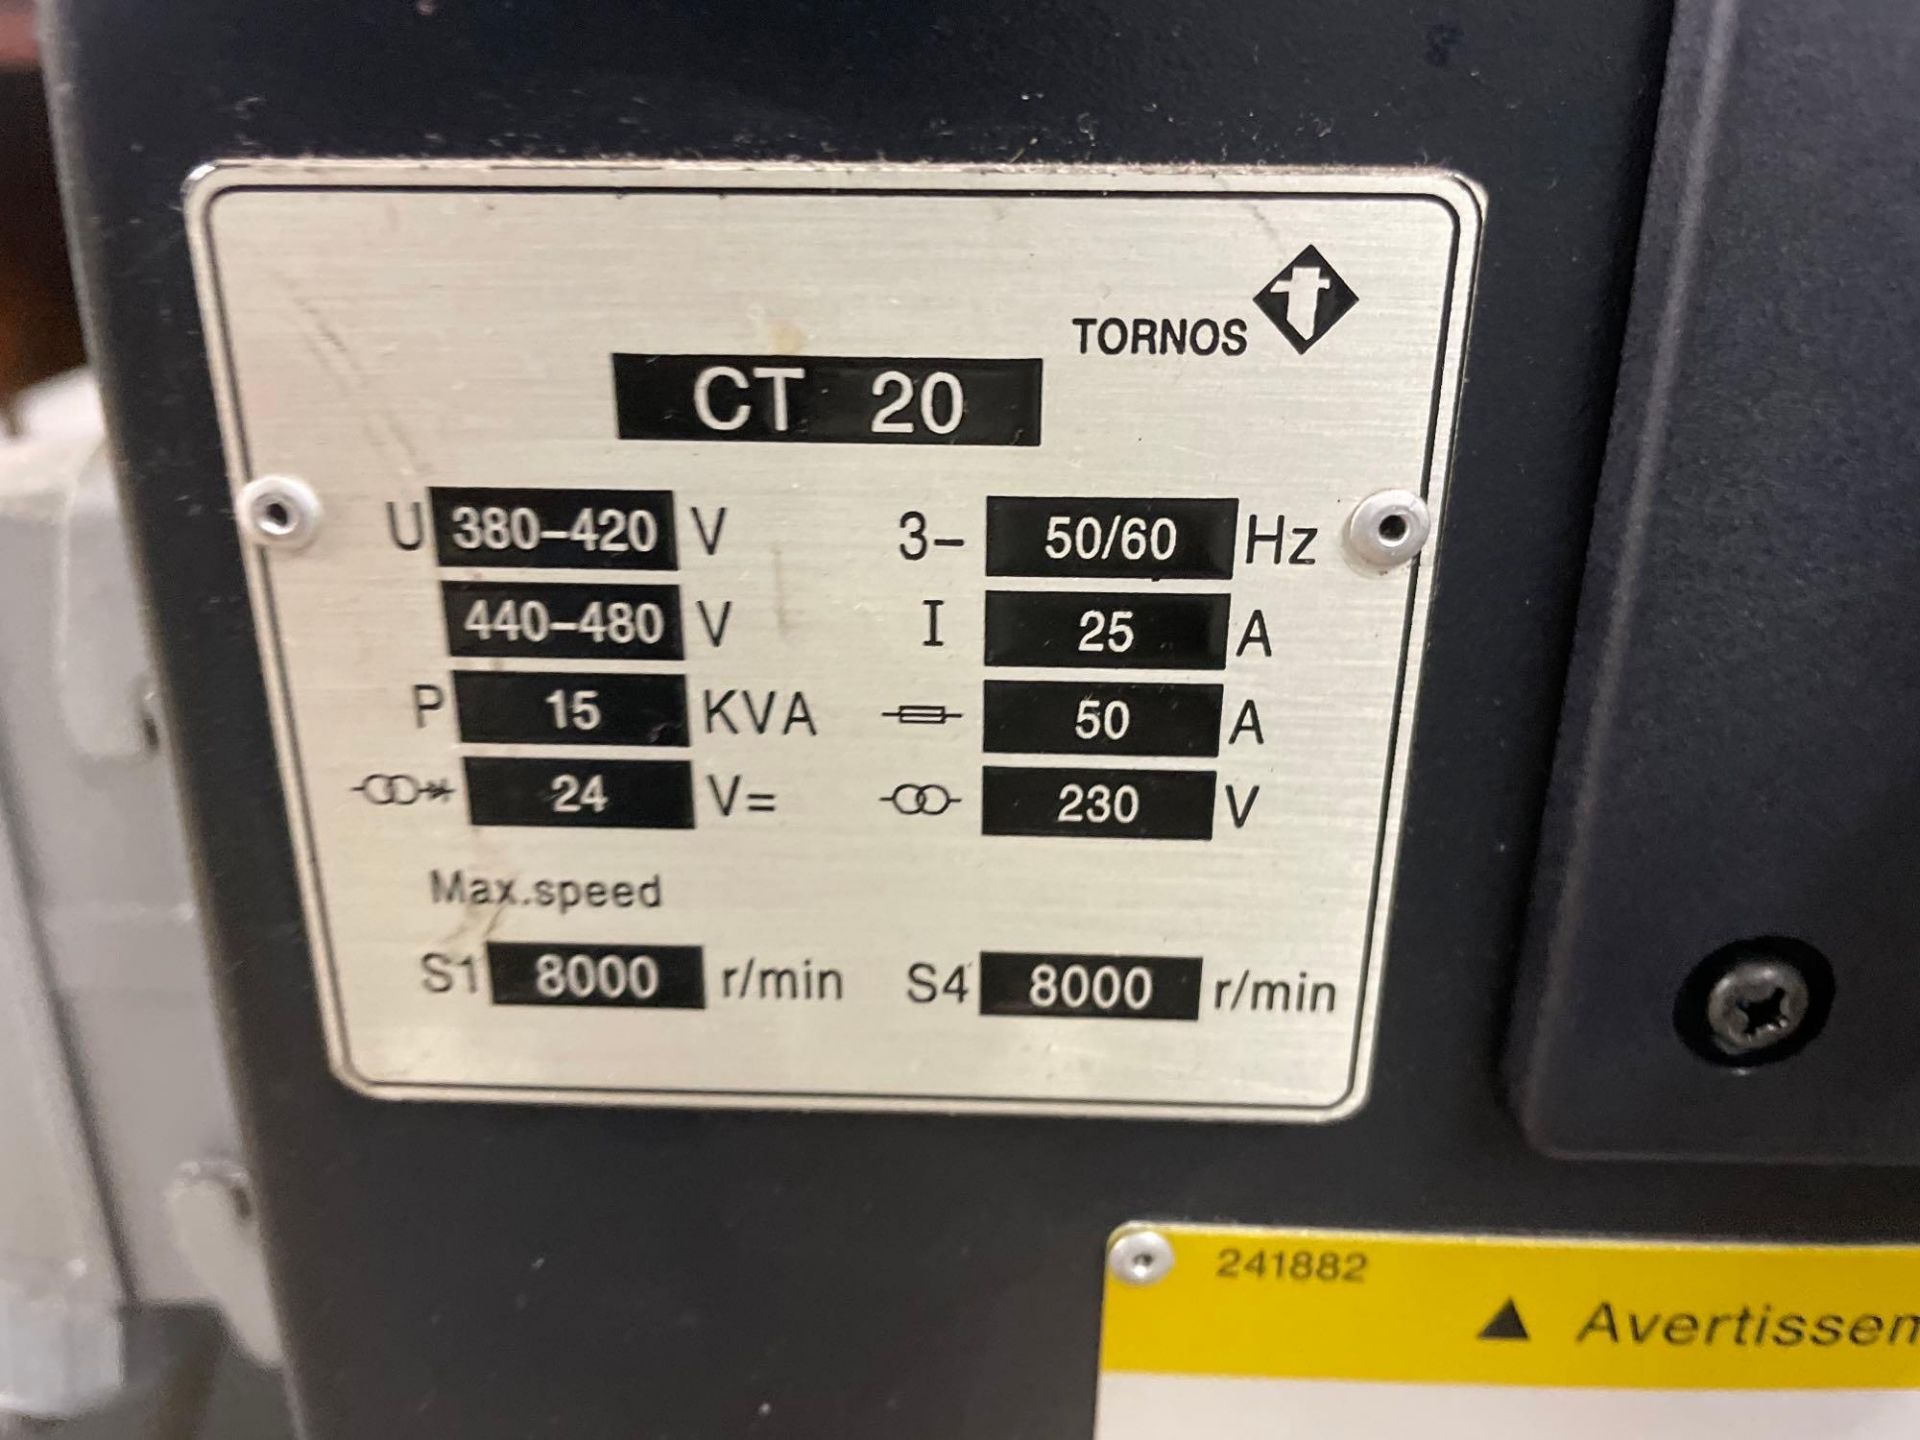 Tornos CT 20 CNC Swiss Style Screw Machine, Fanuc 0i-TD Ctrl., Live Tooling, 8K RPM, New 2014 - Image 15 of 15